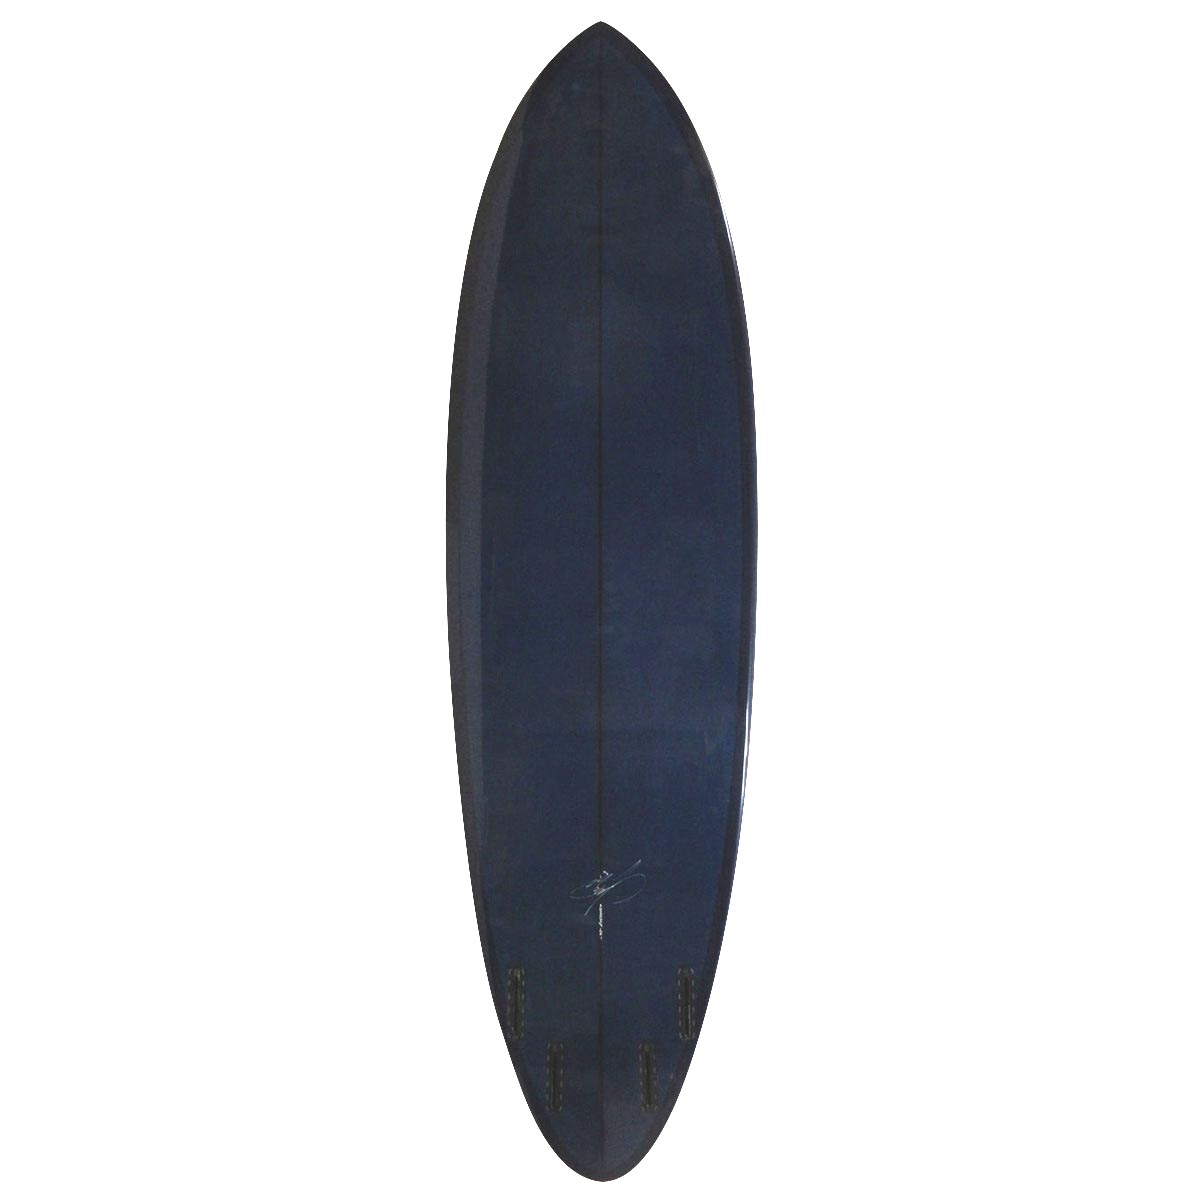 Mccallum Surfboards / Upside Down Egg 7`2 Shaped By Jeff Mccallum